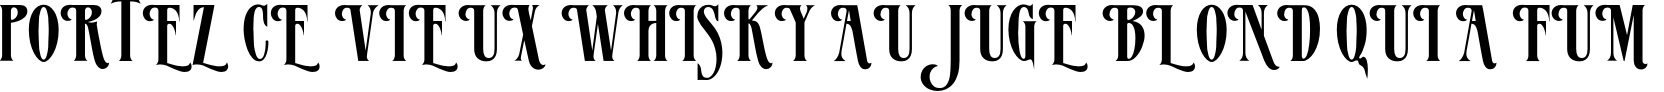 Пример написания шрифтом Patricia TYGRA текста на французском